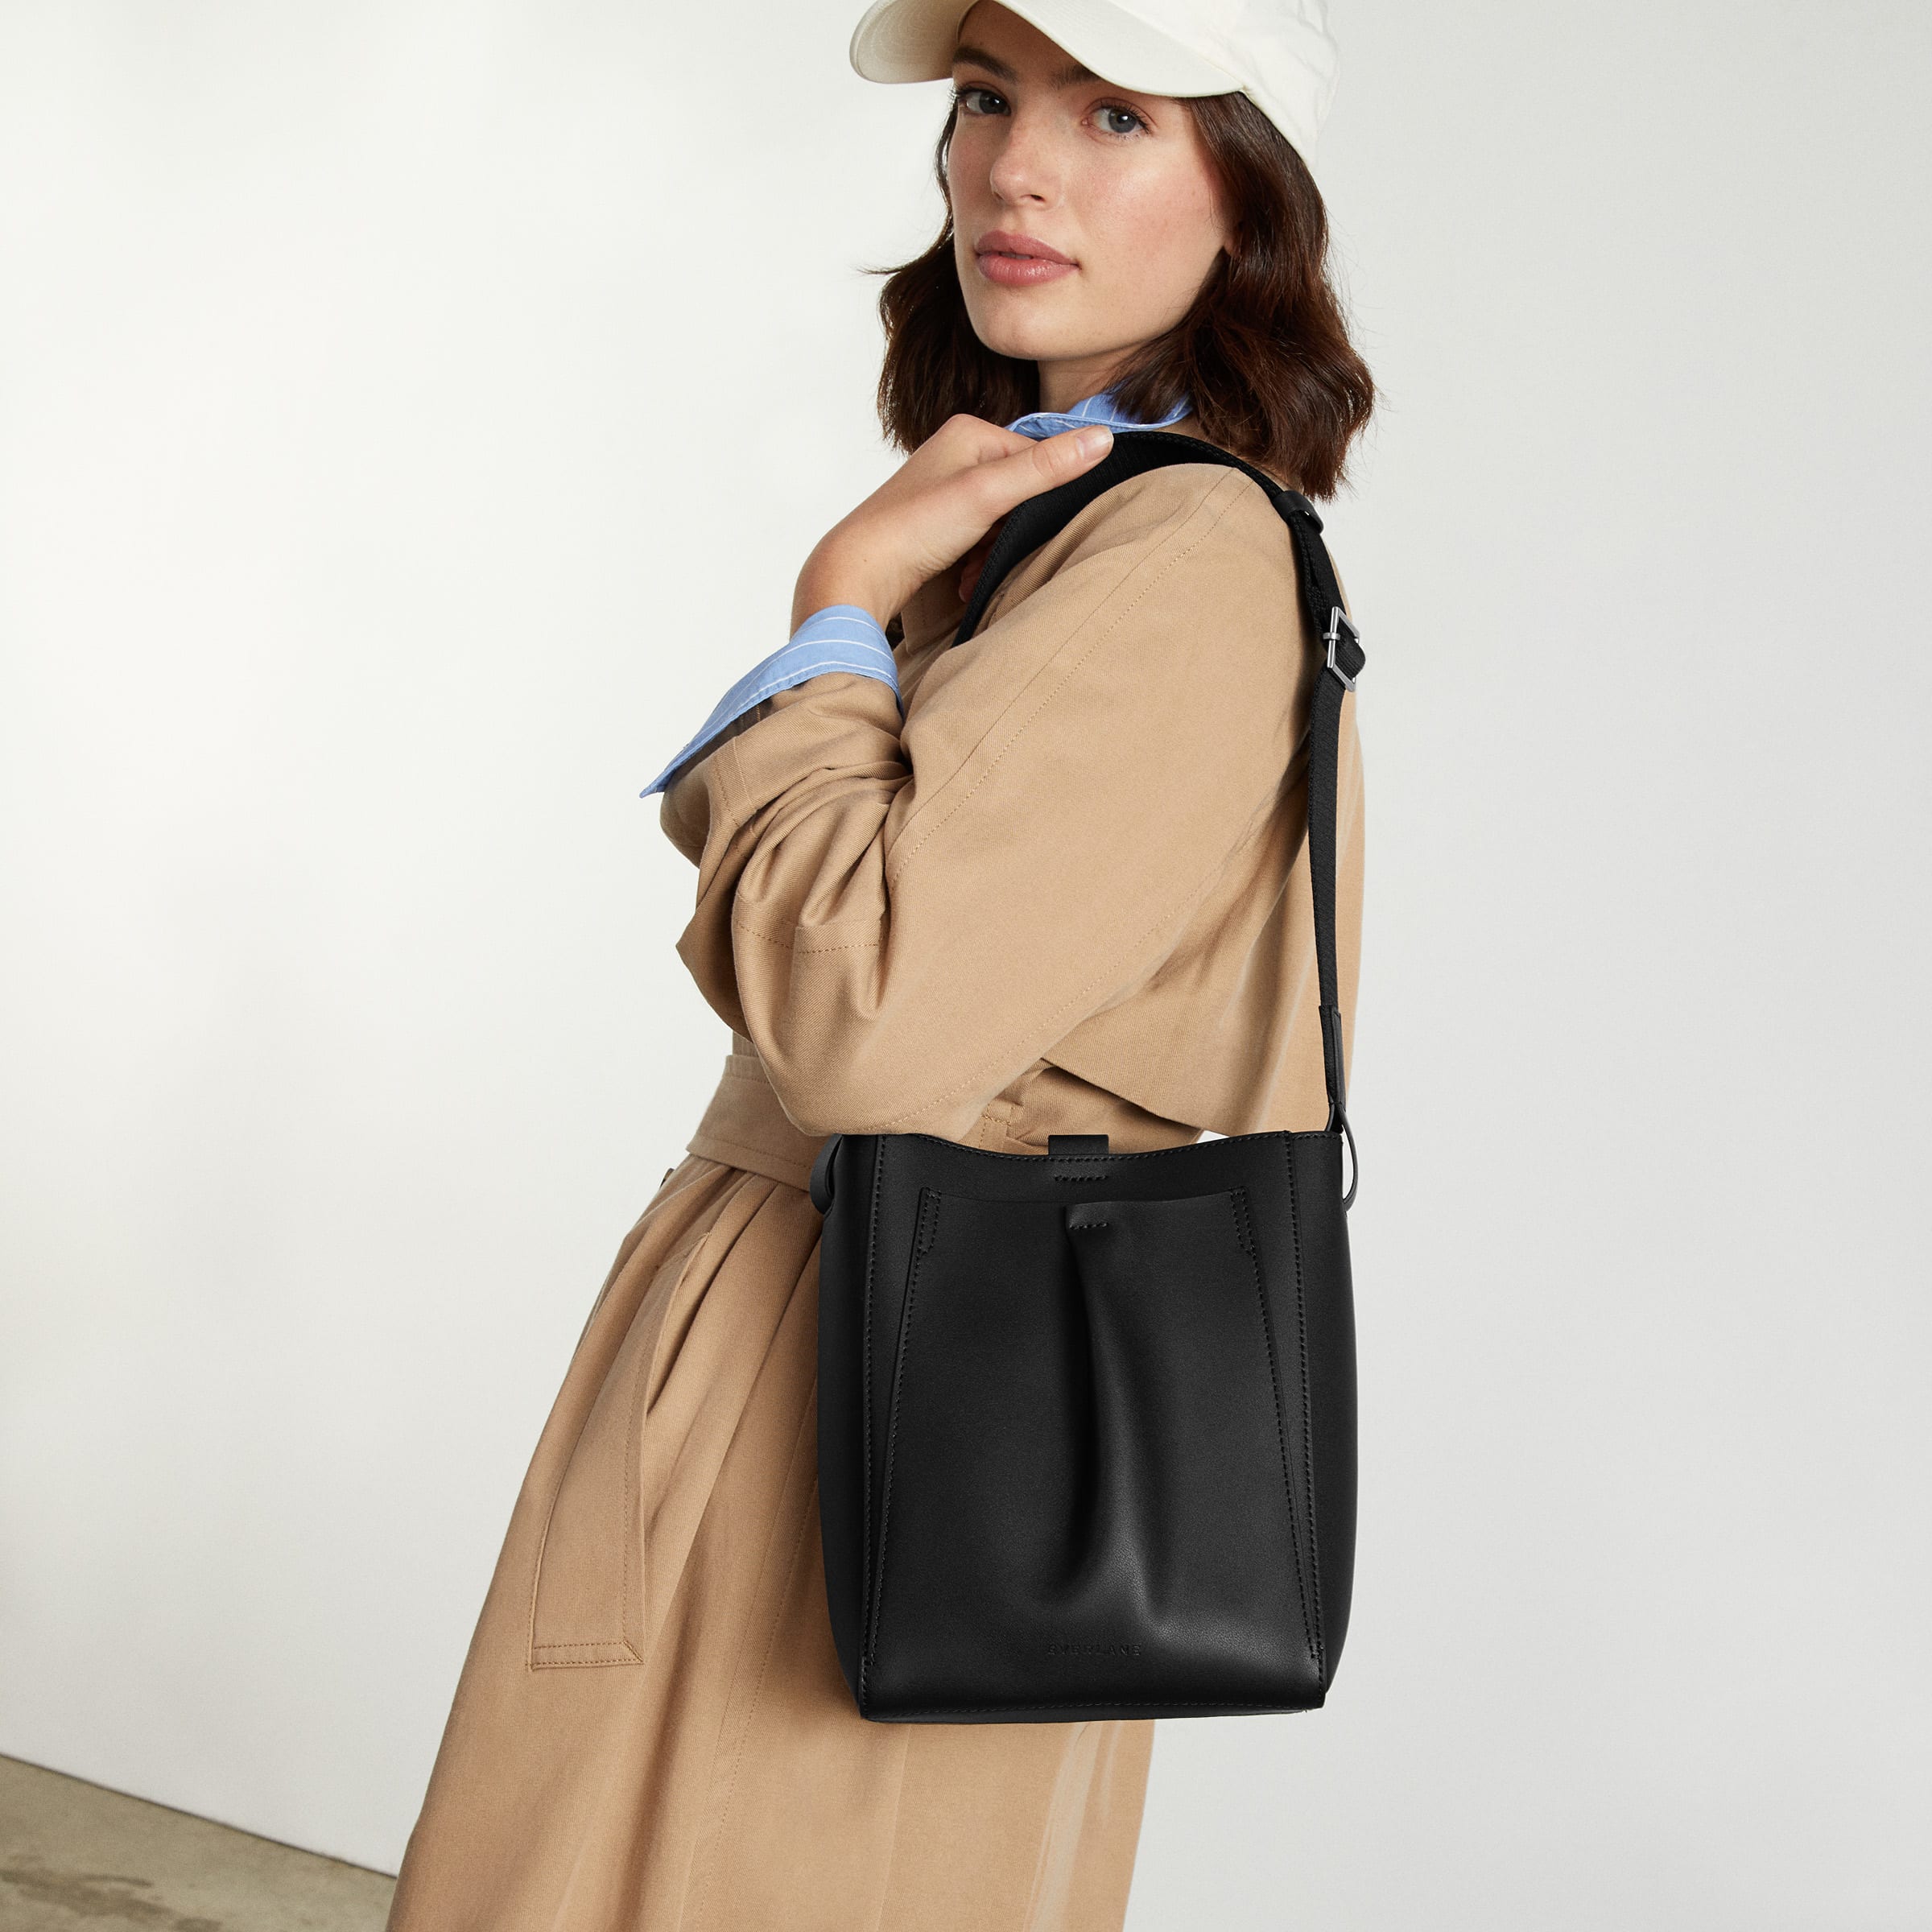 Everlane Women's Luxe Medium Italian Leather Tote Bag